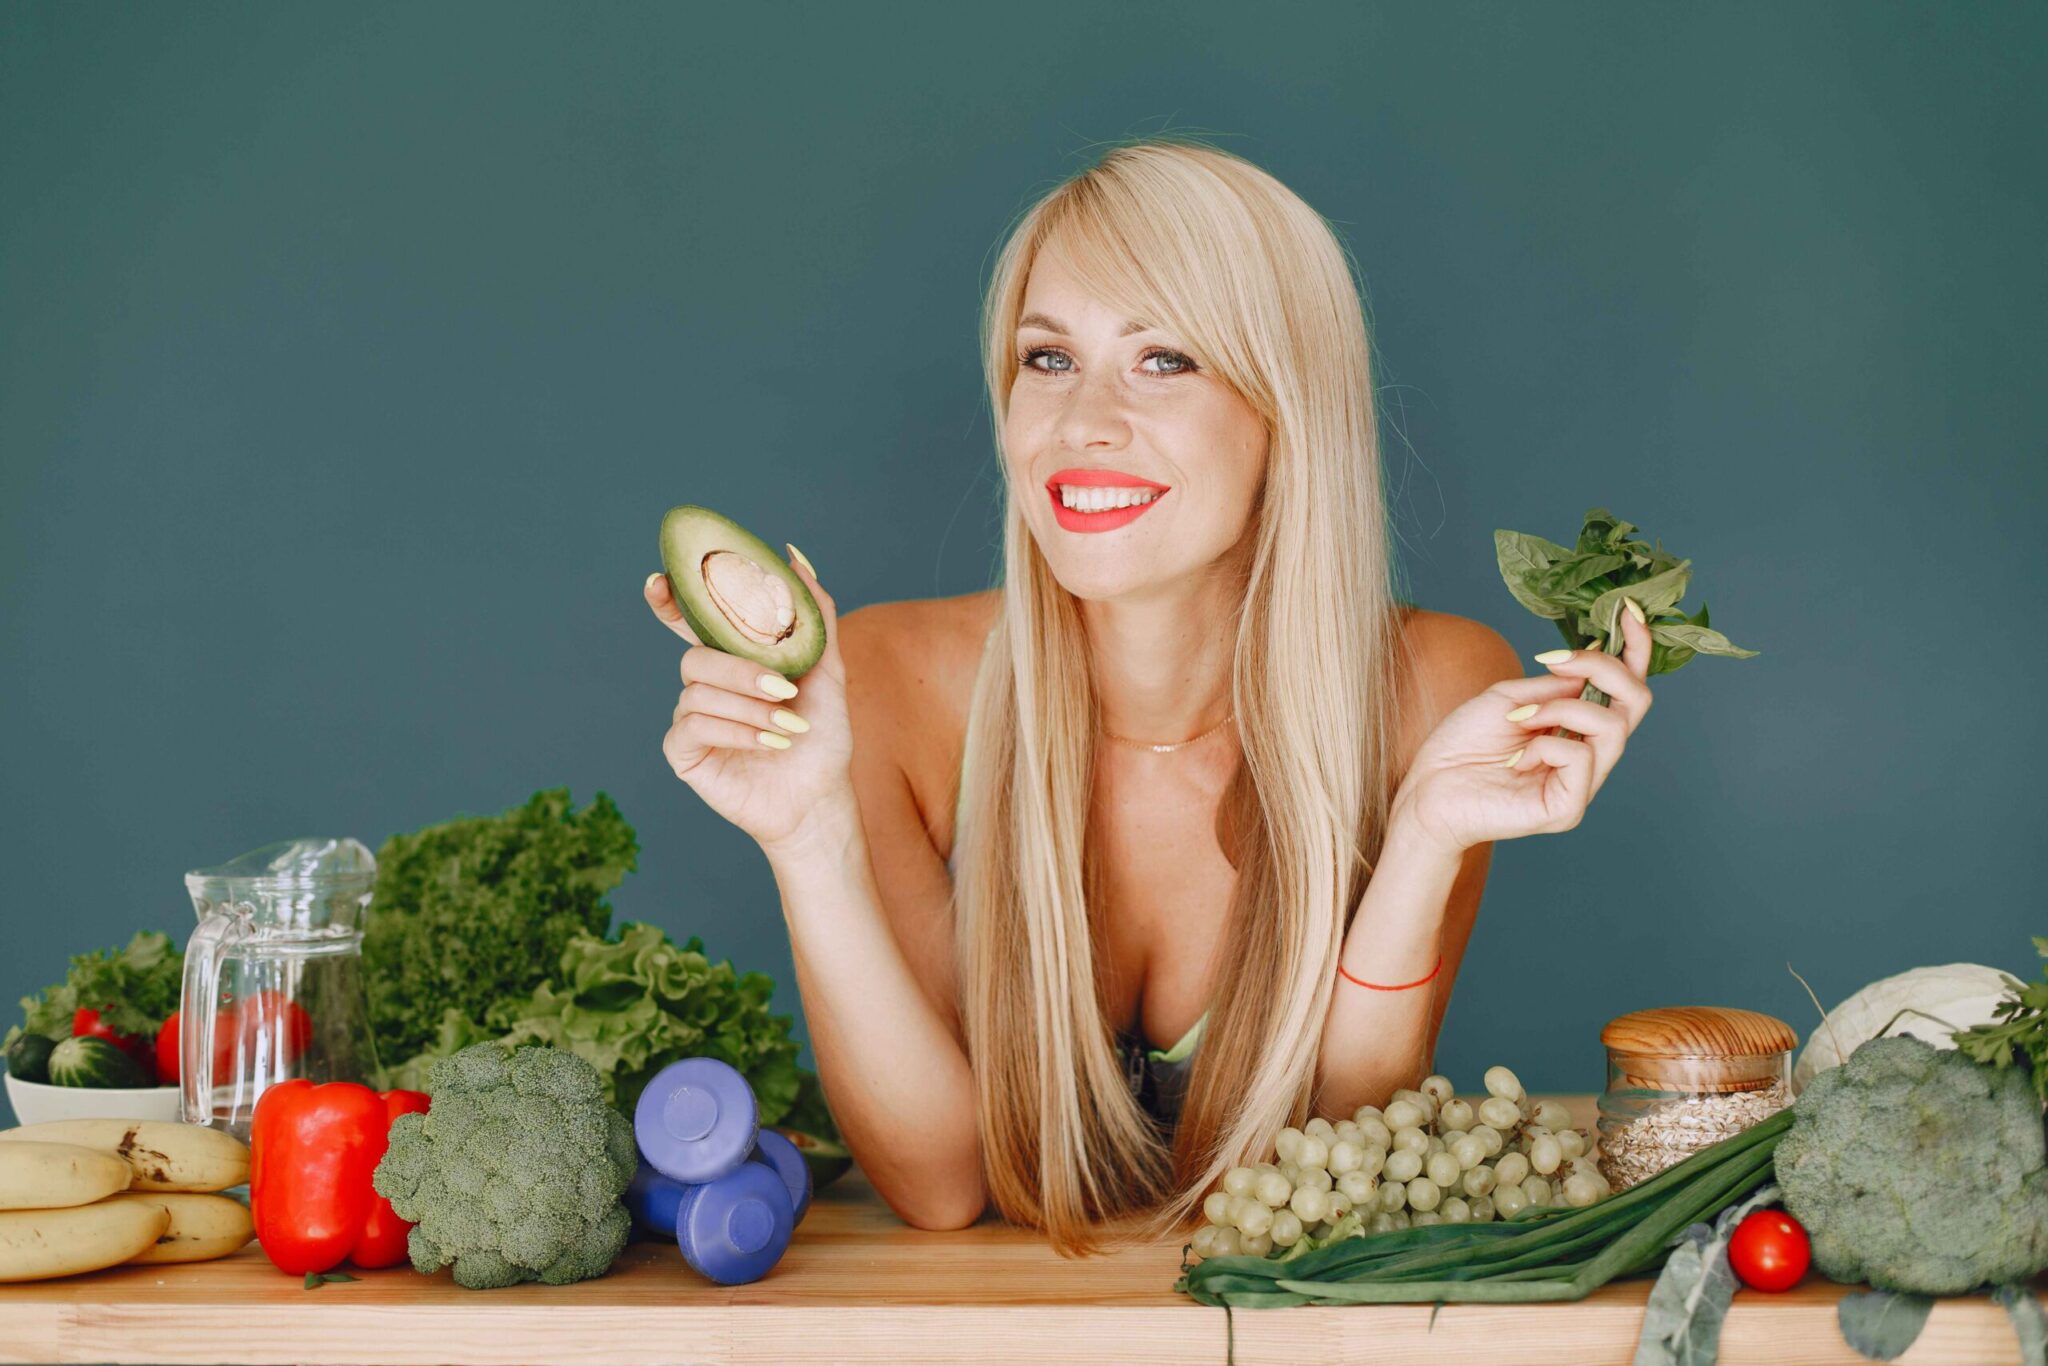 beautiful-girl-make-salad-sporty-blonde-kitchen-woman-with-avocado